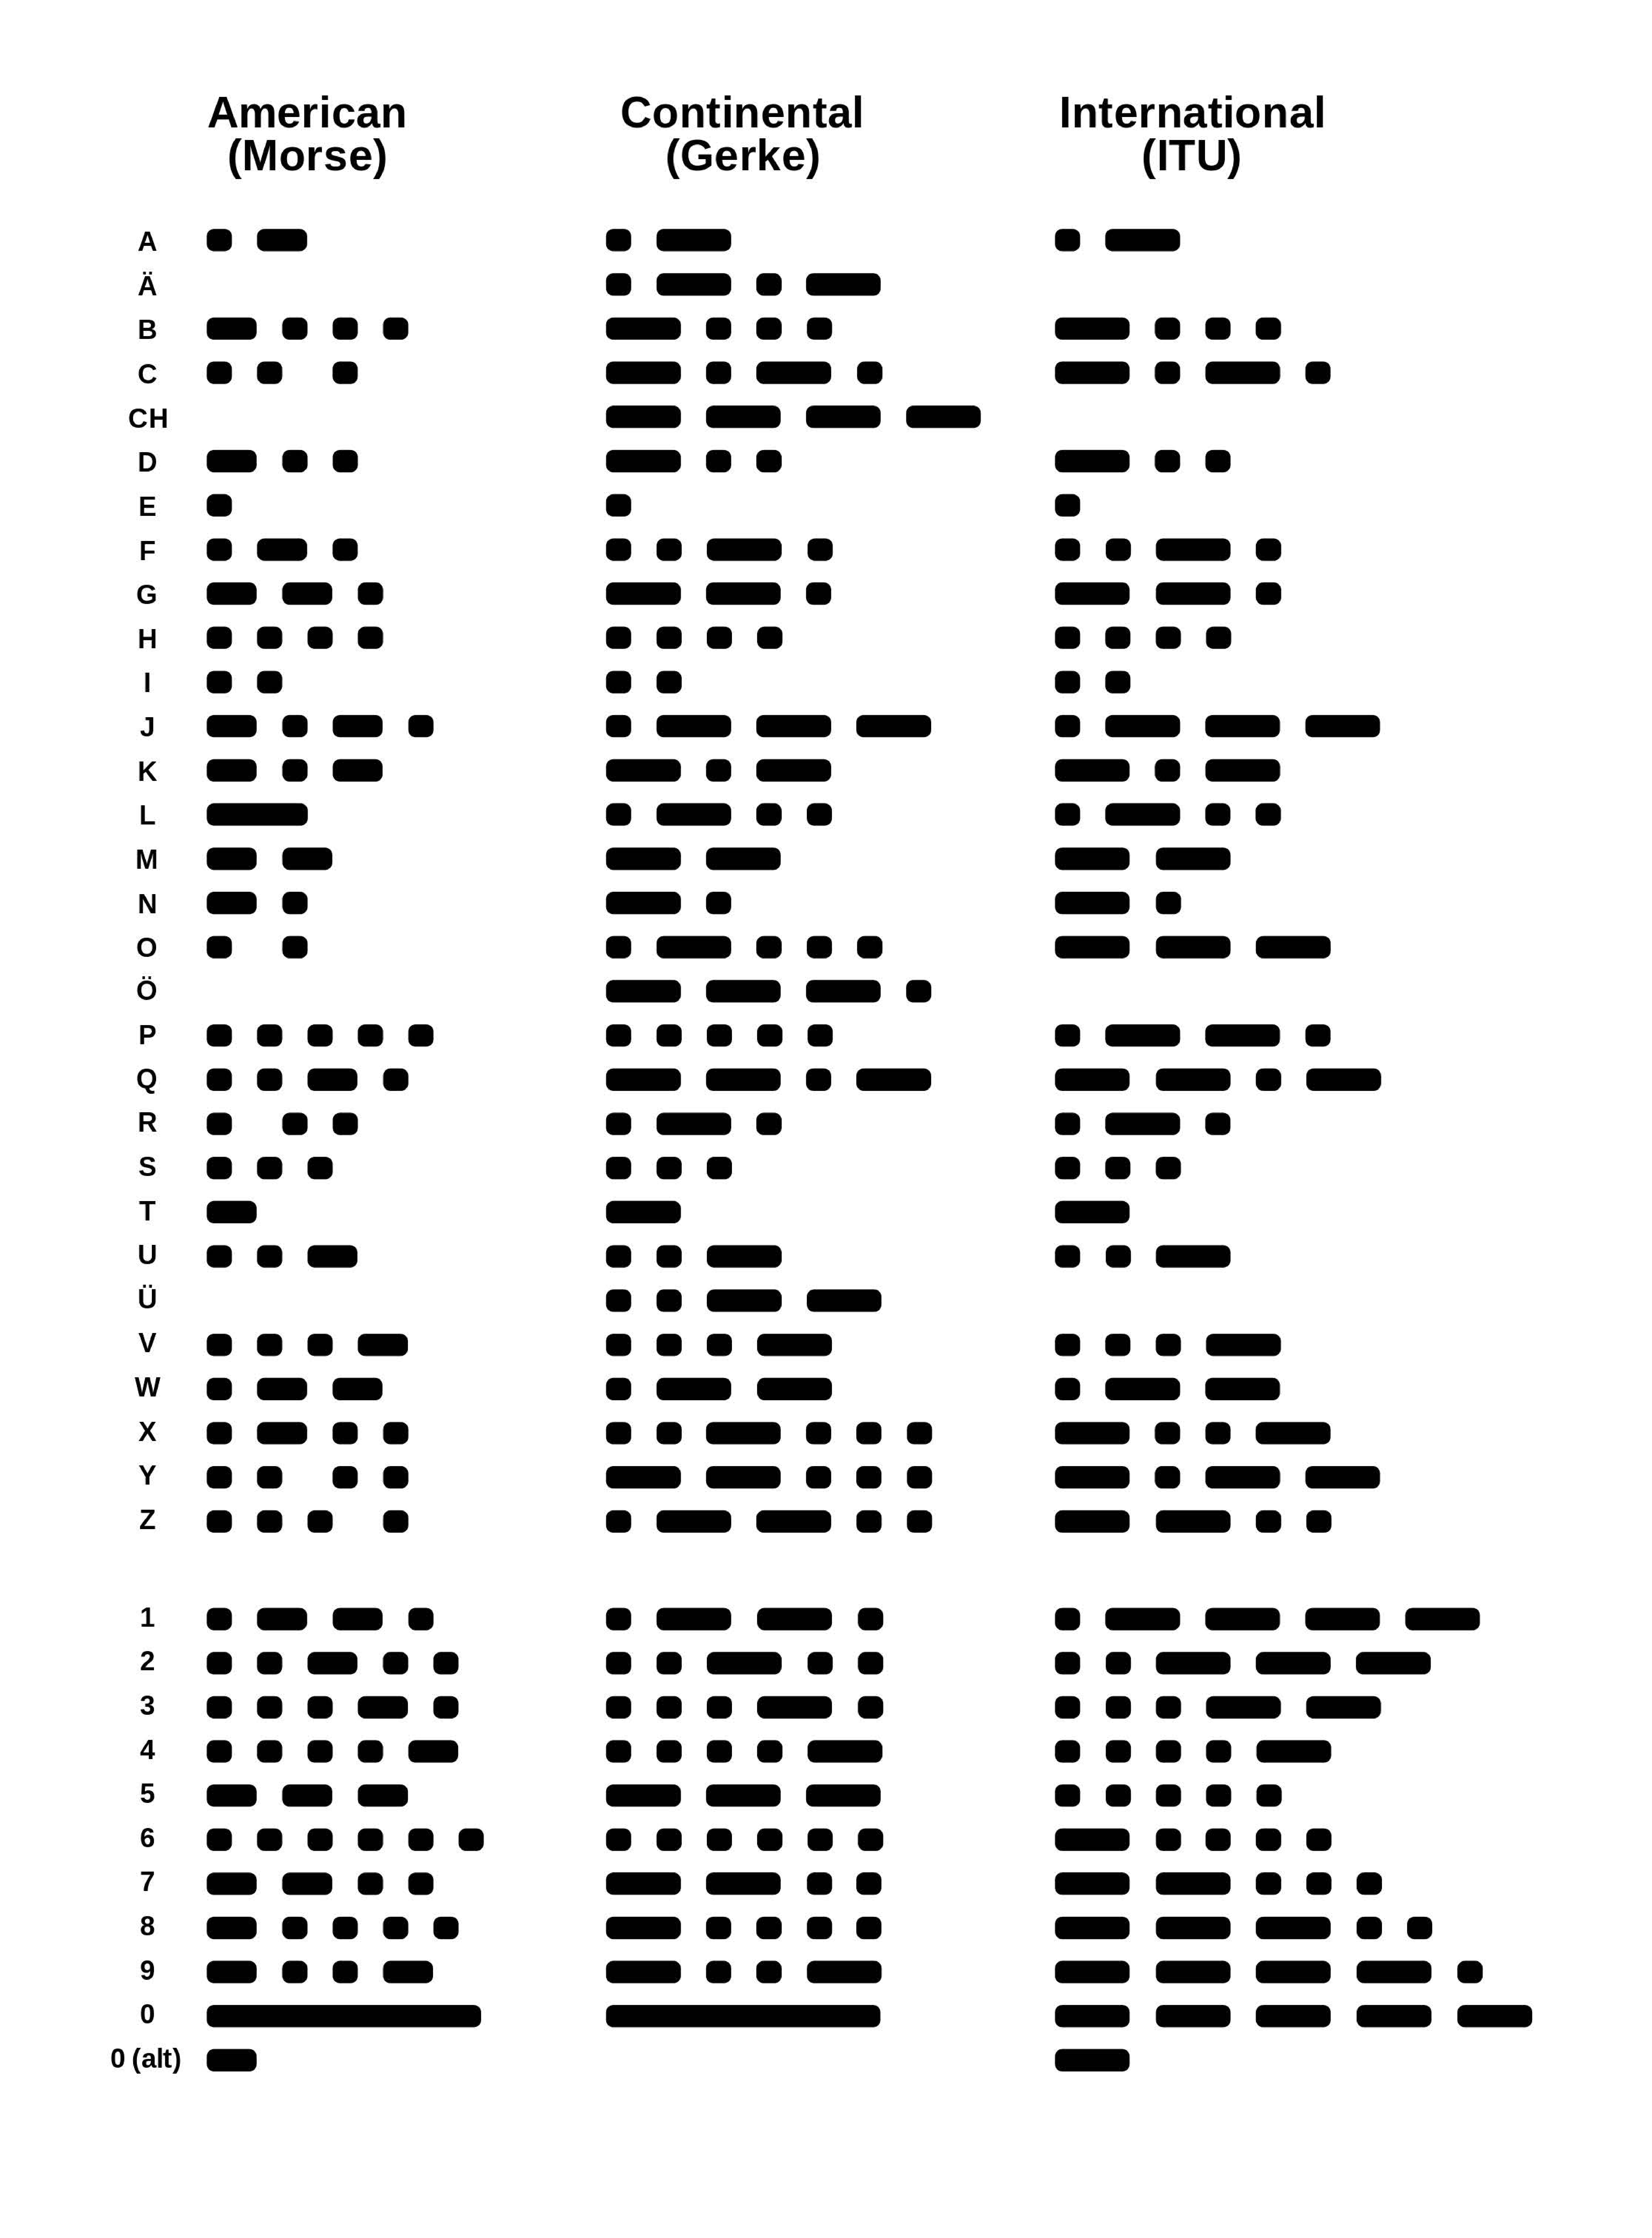 Morse Alphabet main image